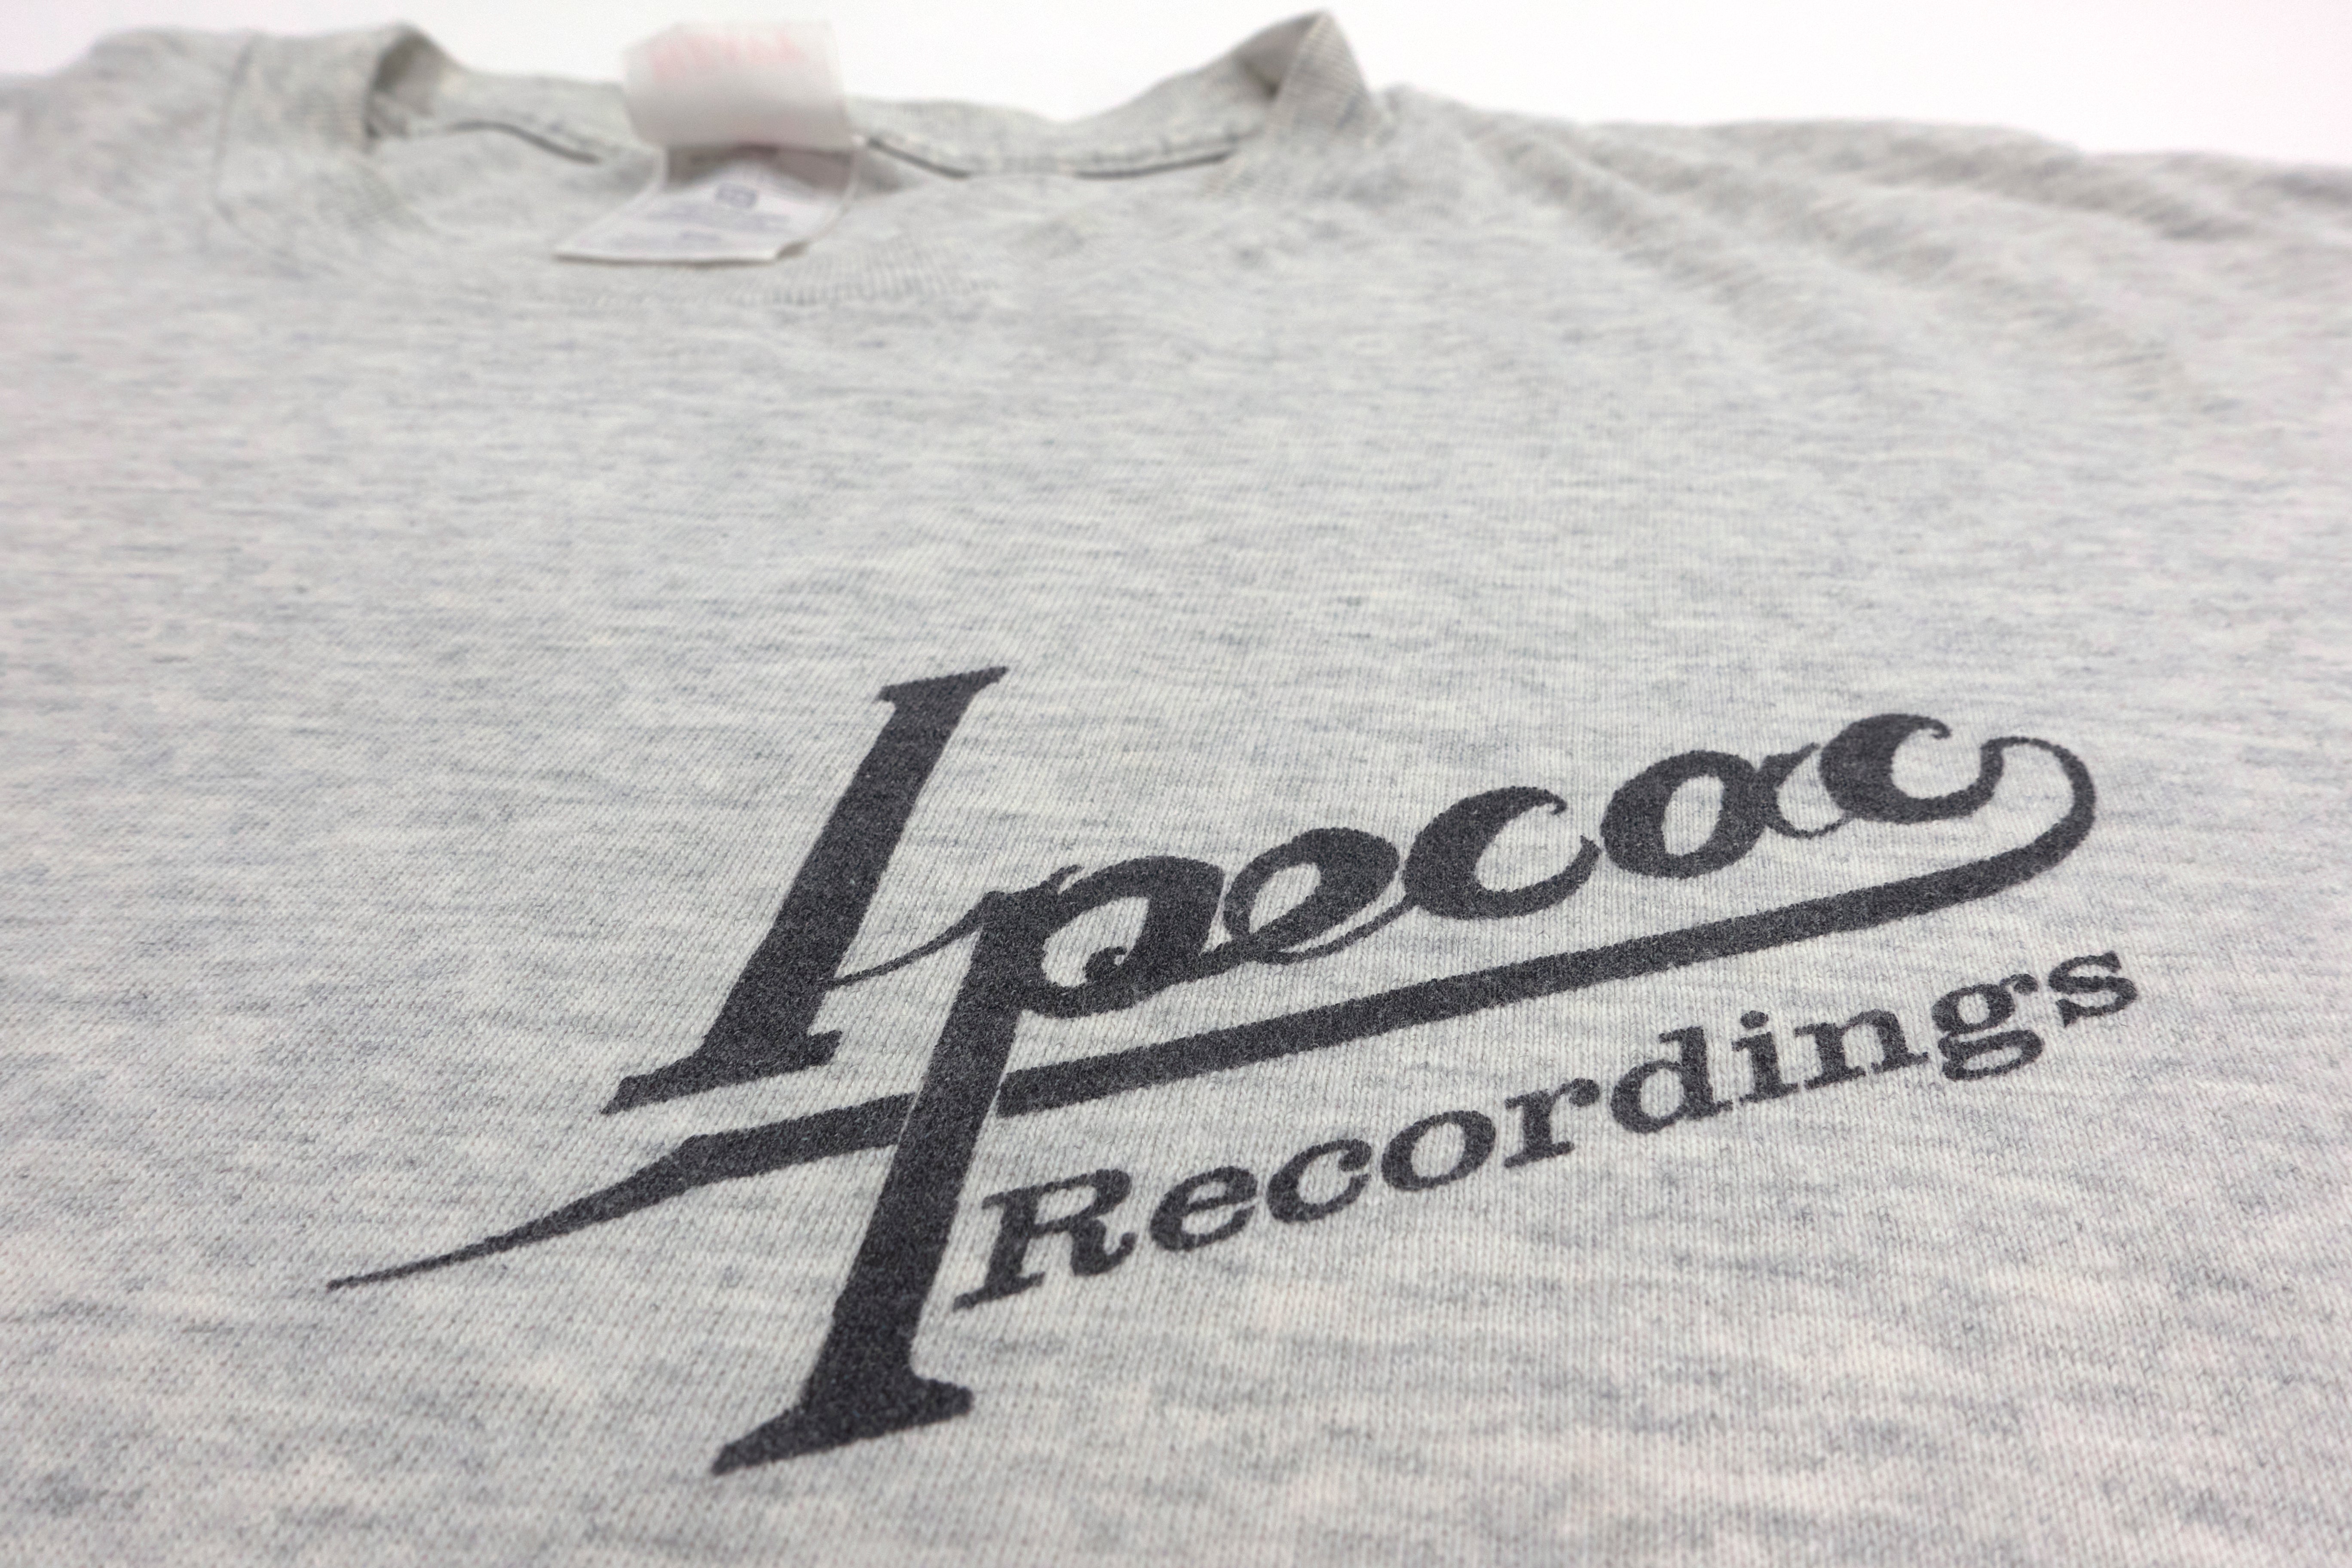 Ipecac Recordings - Making People Sick Since 1999 Shirt Size XL